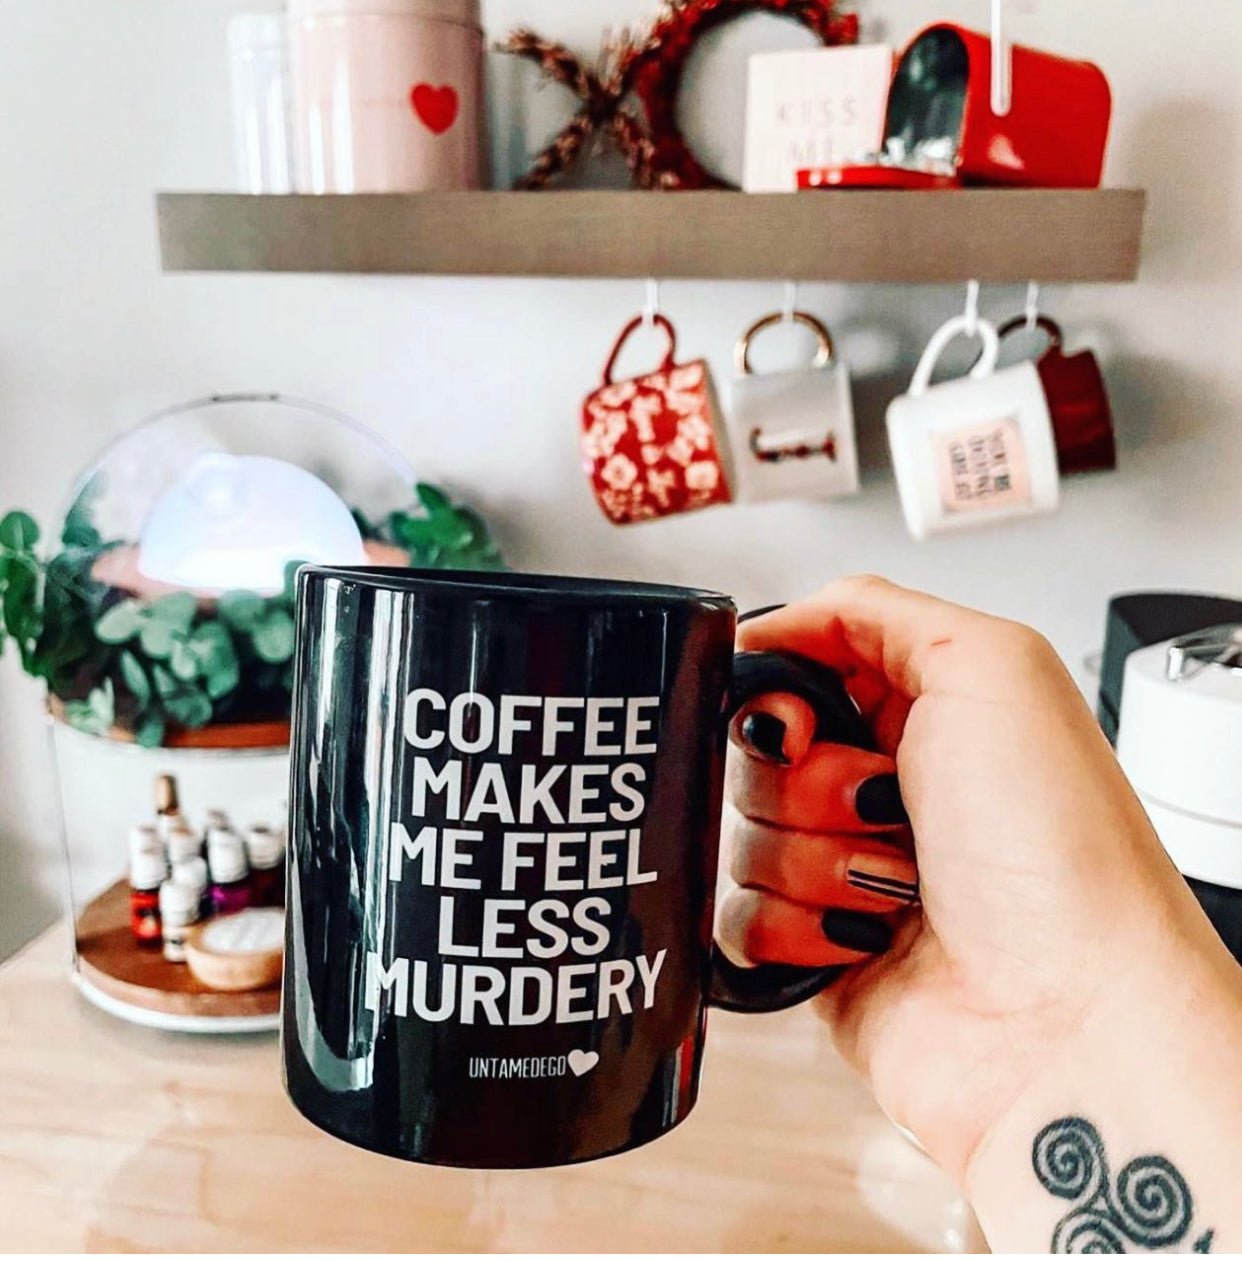 Coffee Makes Me Feel Less Murdery Mugs - UntamedEgo LLC.